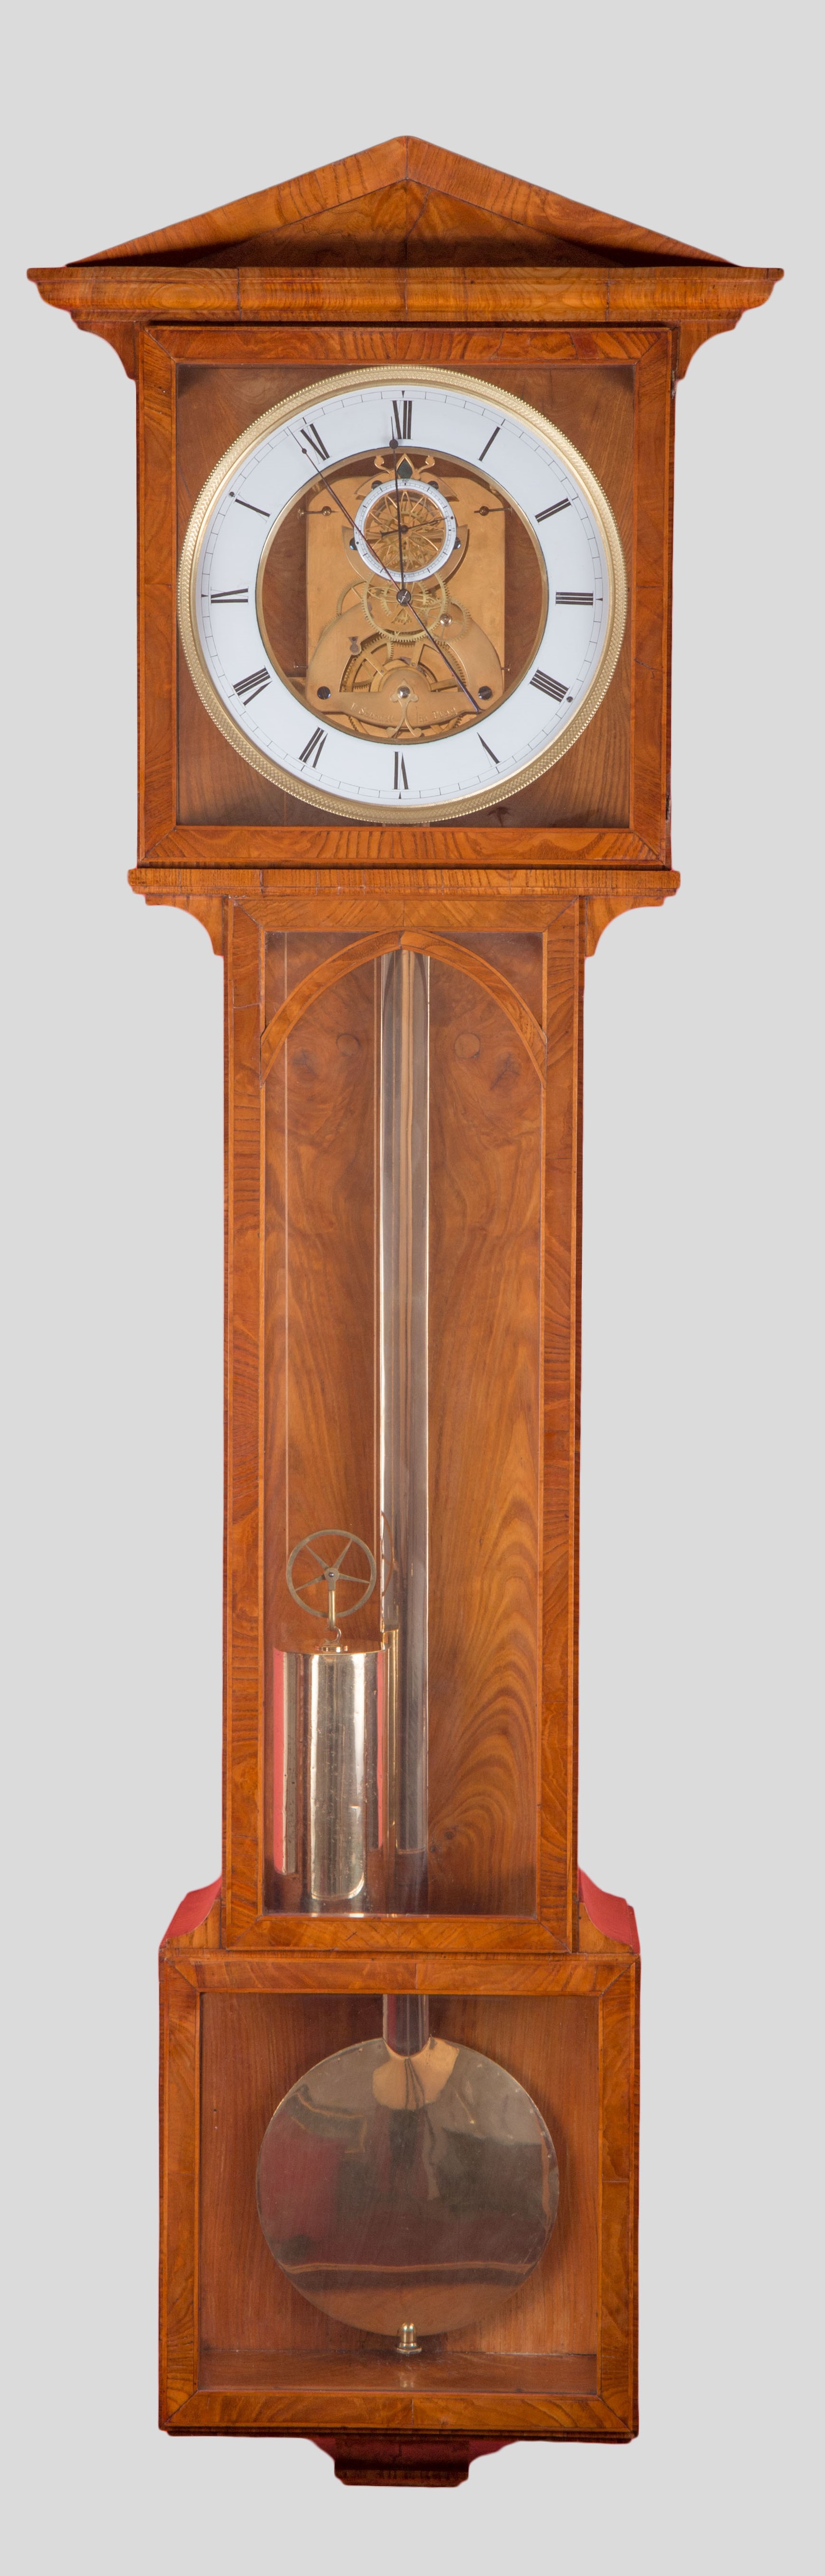 Laterndl clock by Ferdinand Karl Schmidt with 1 year duration, c. 1835.